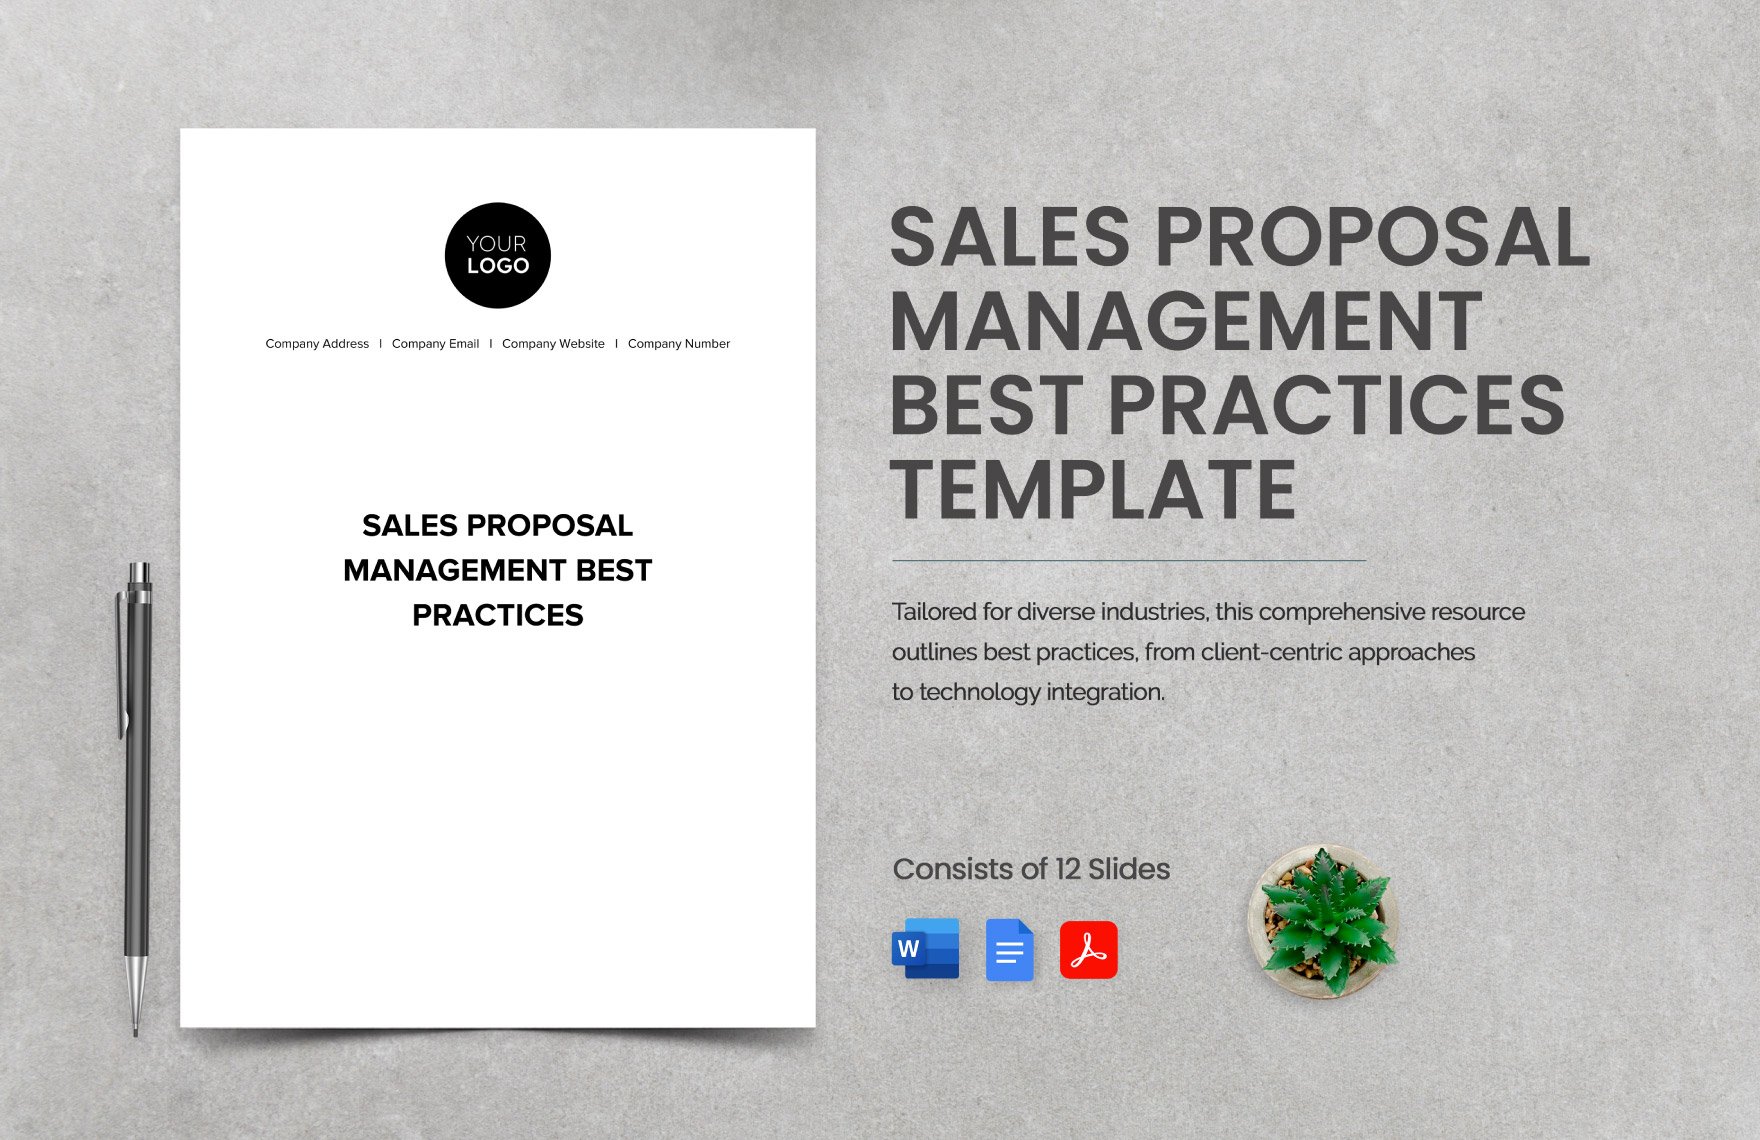 Sales Proposal Management Best Practices Template in Word, Google Docs, PDF